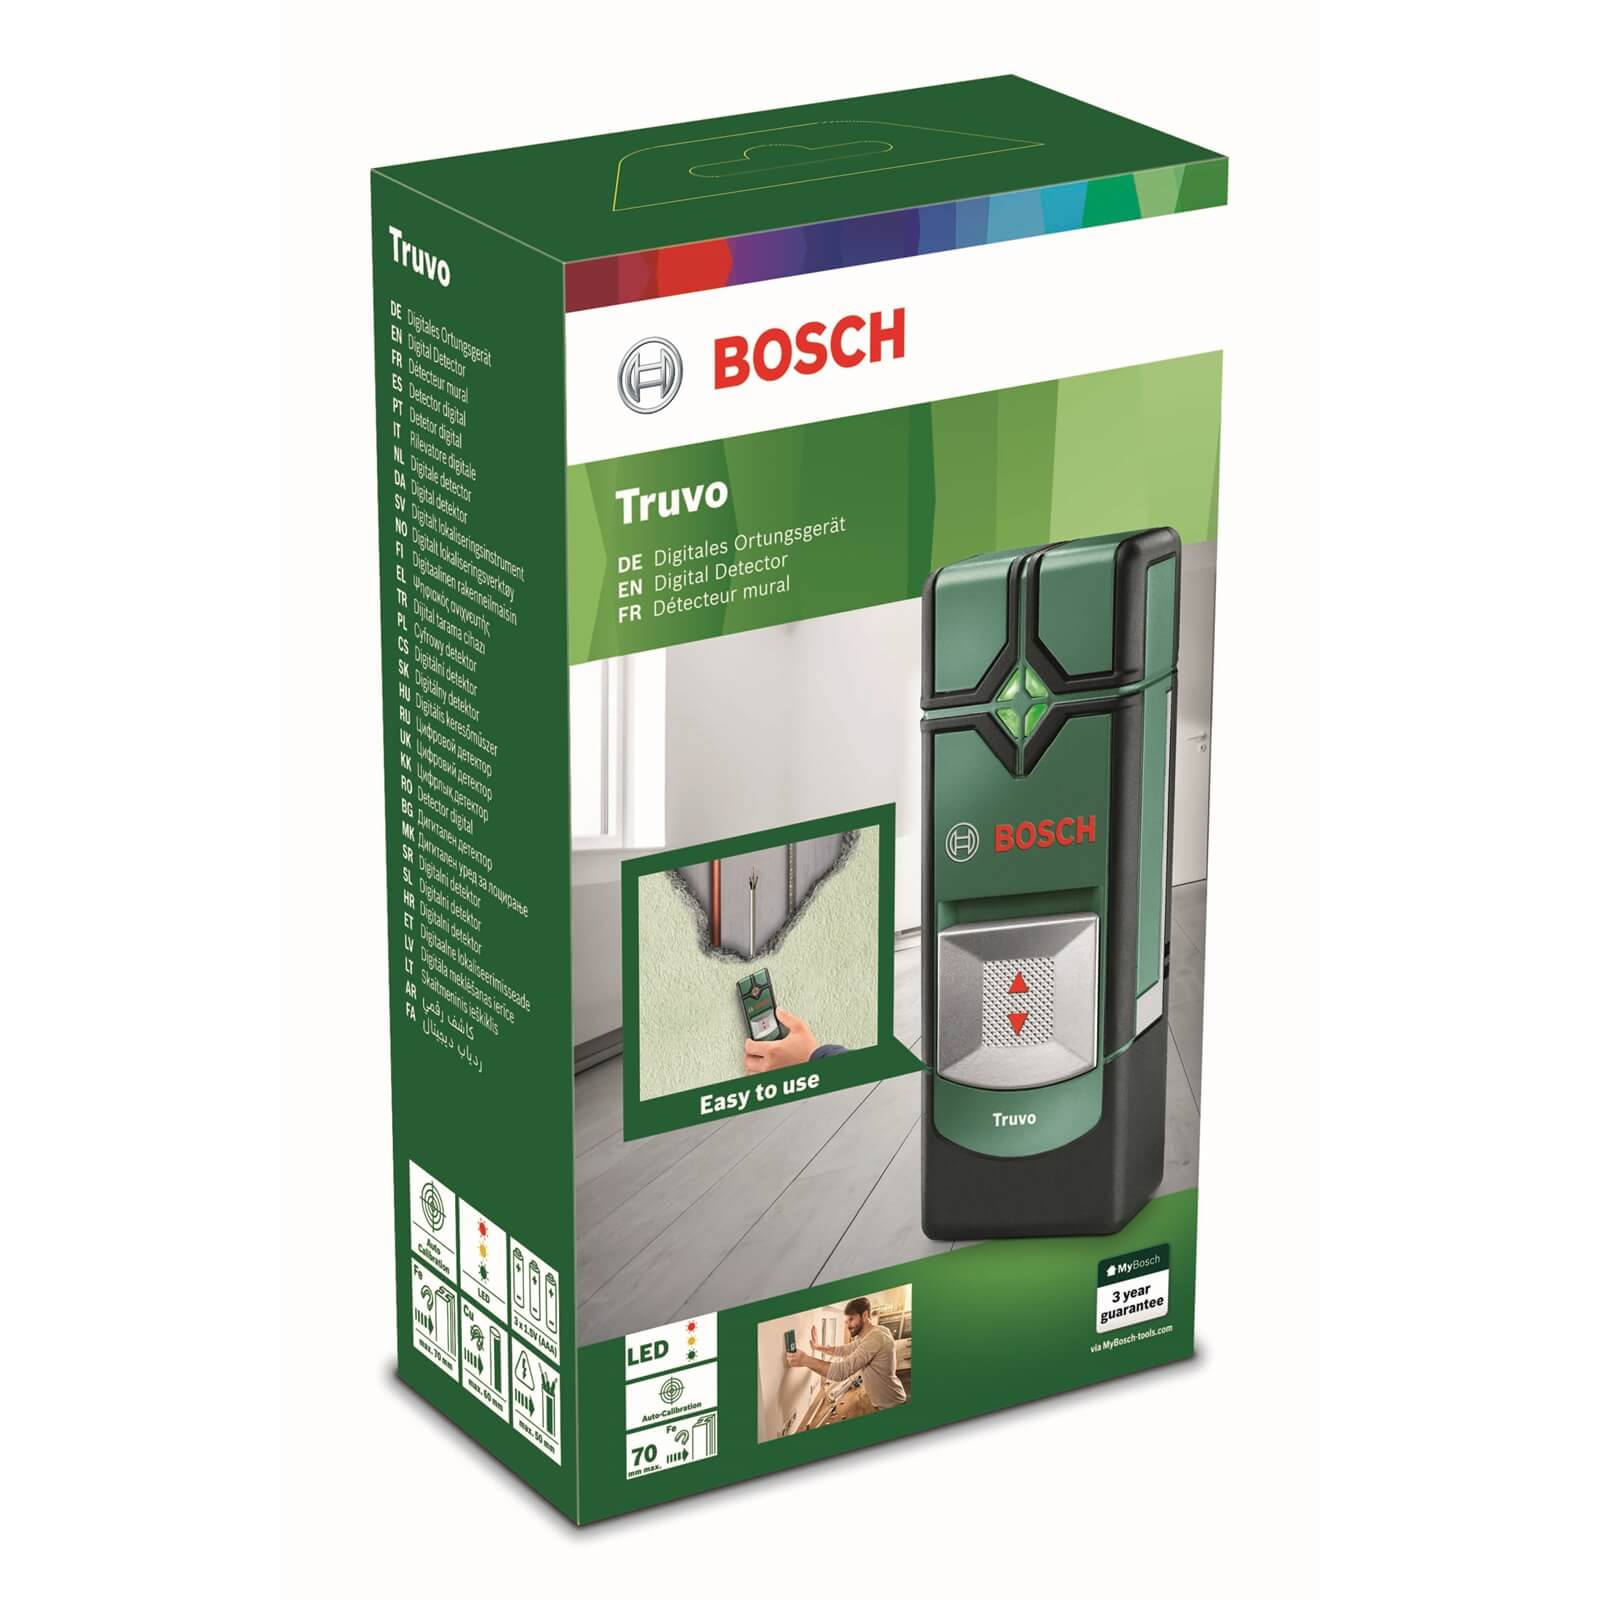 Bosch Truvo Detector